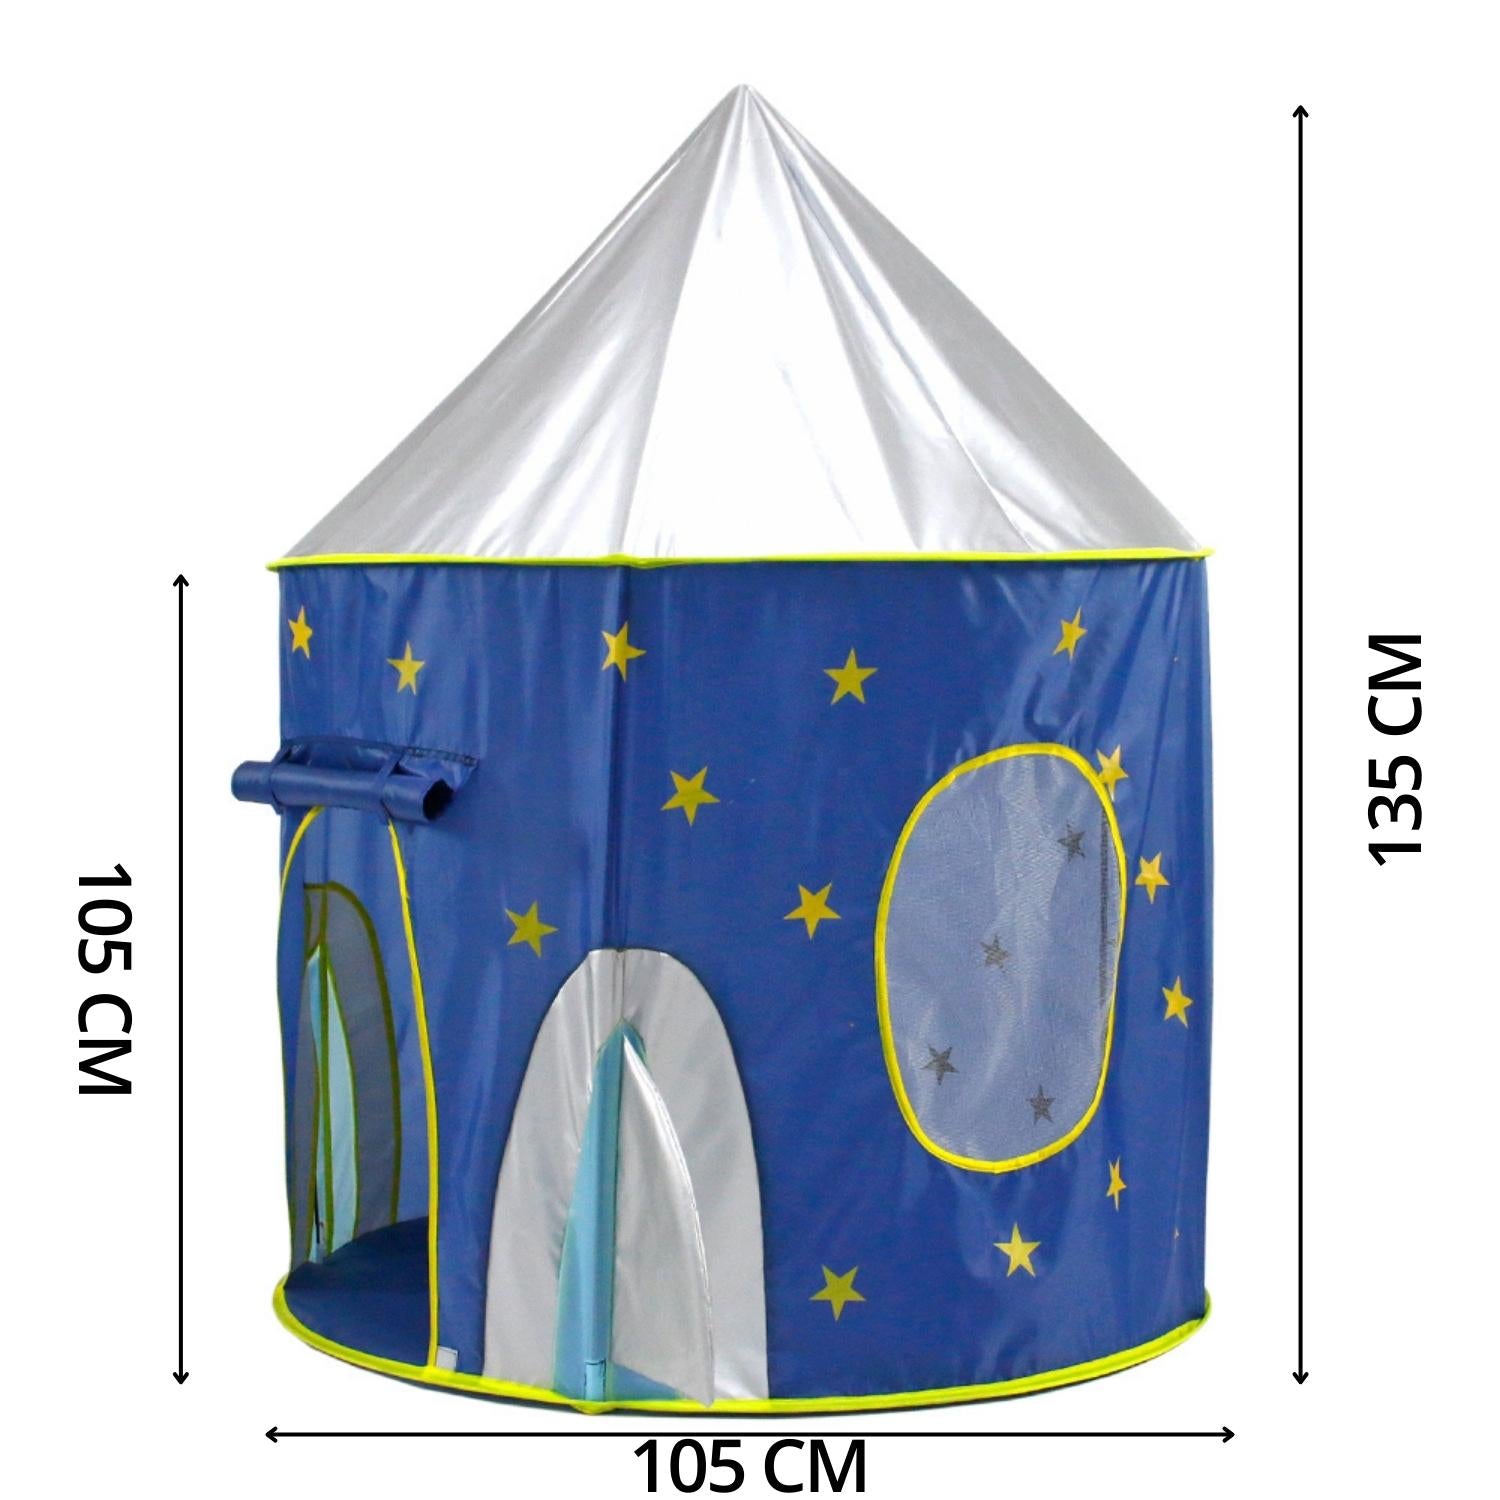 GOMINIMO Kids Space Capsule Tent (Blue) GO-KT-105-LK - SILBERSHELL